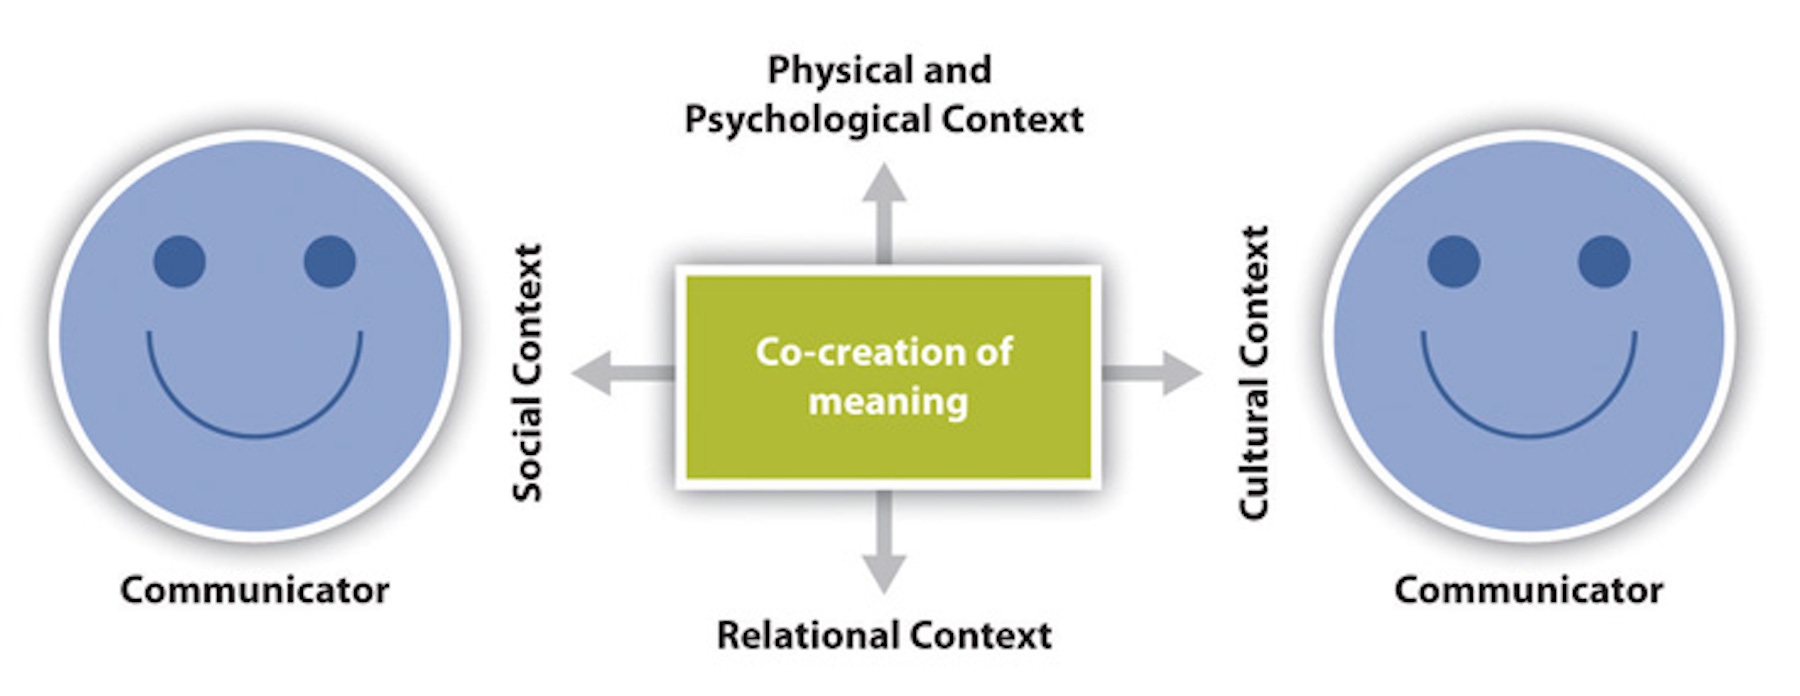 Transaction model of communication